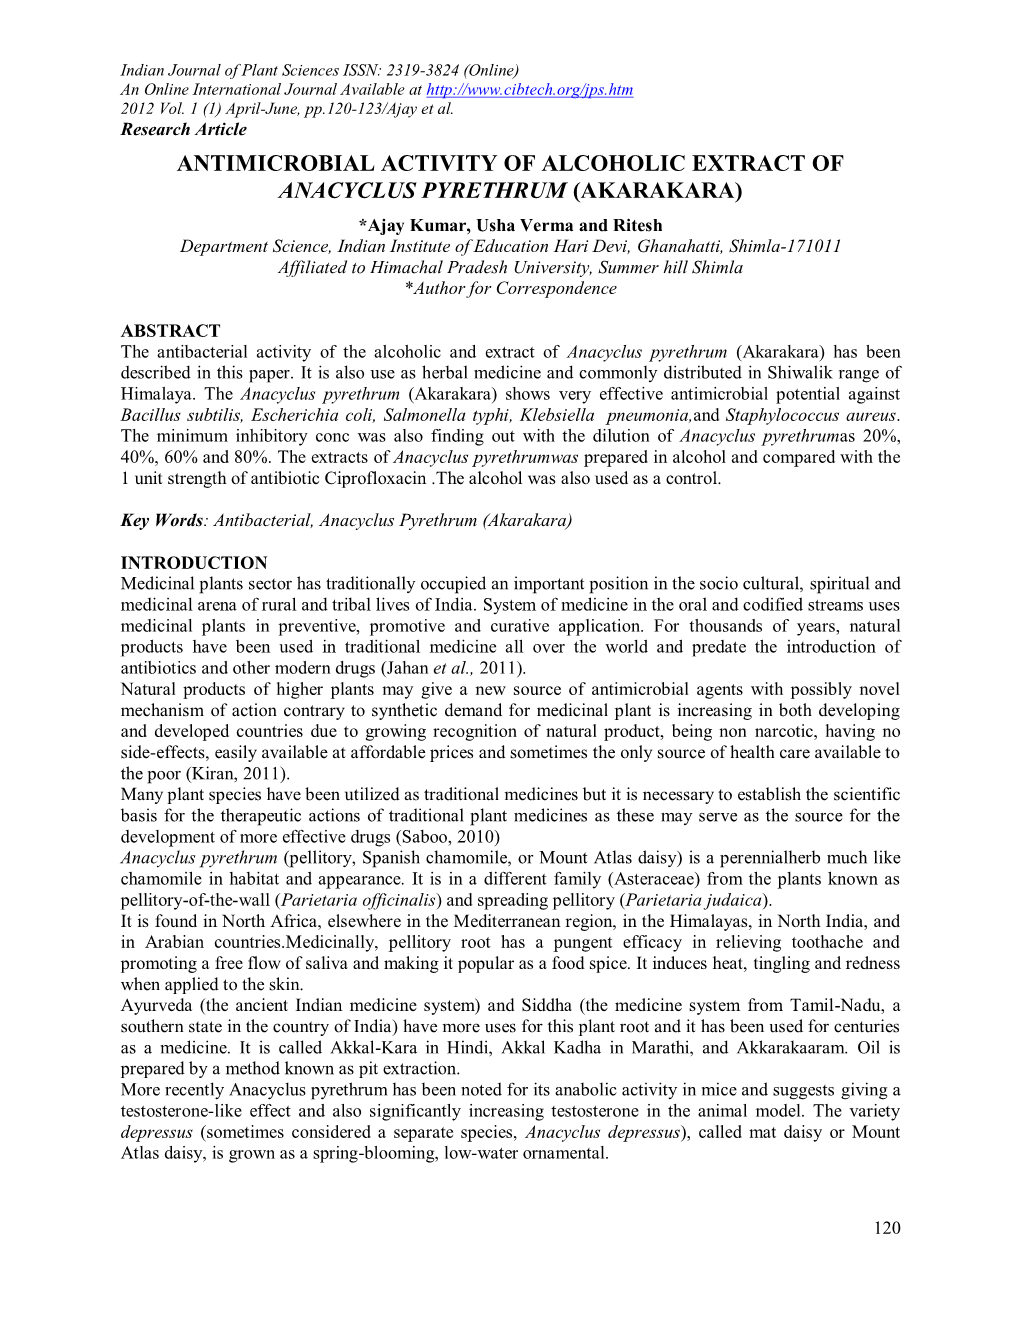 Antimicrobial Activity of Alcoholic Extract of Anacyclus Pyrethrum (Akarakara)